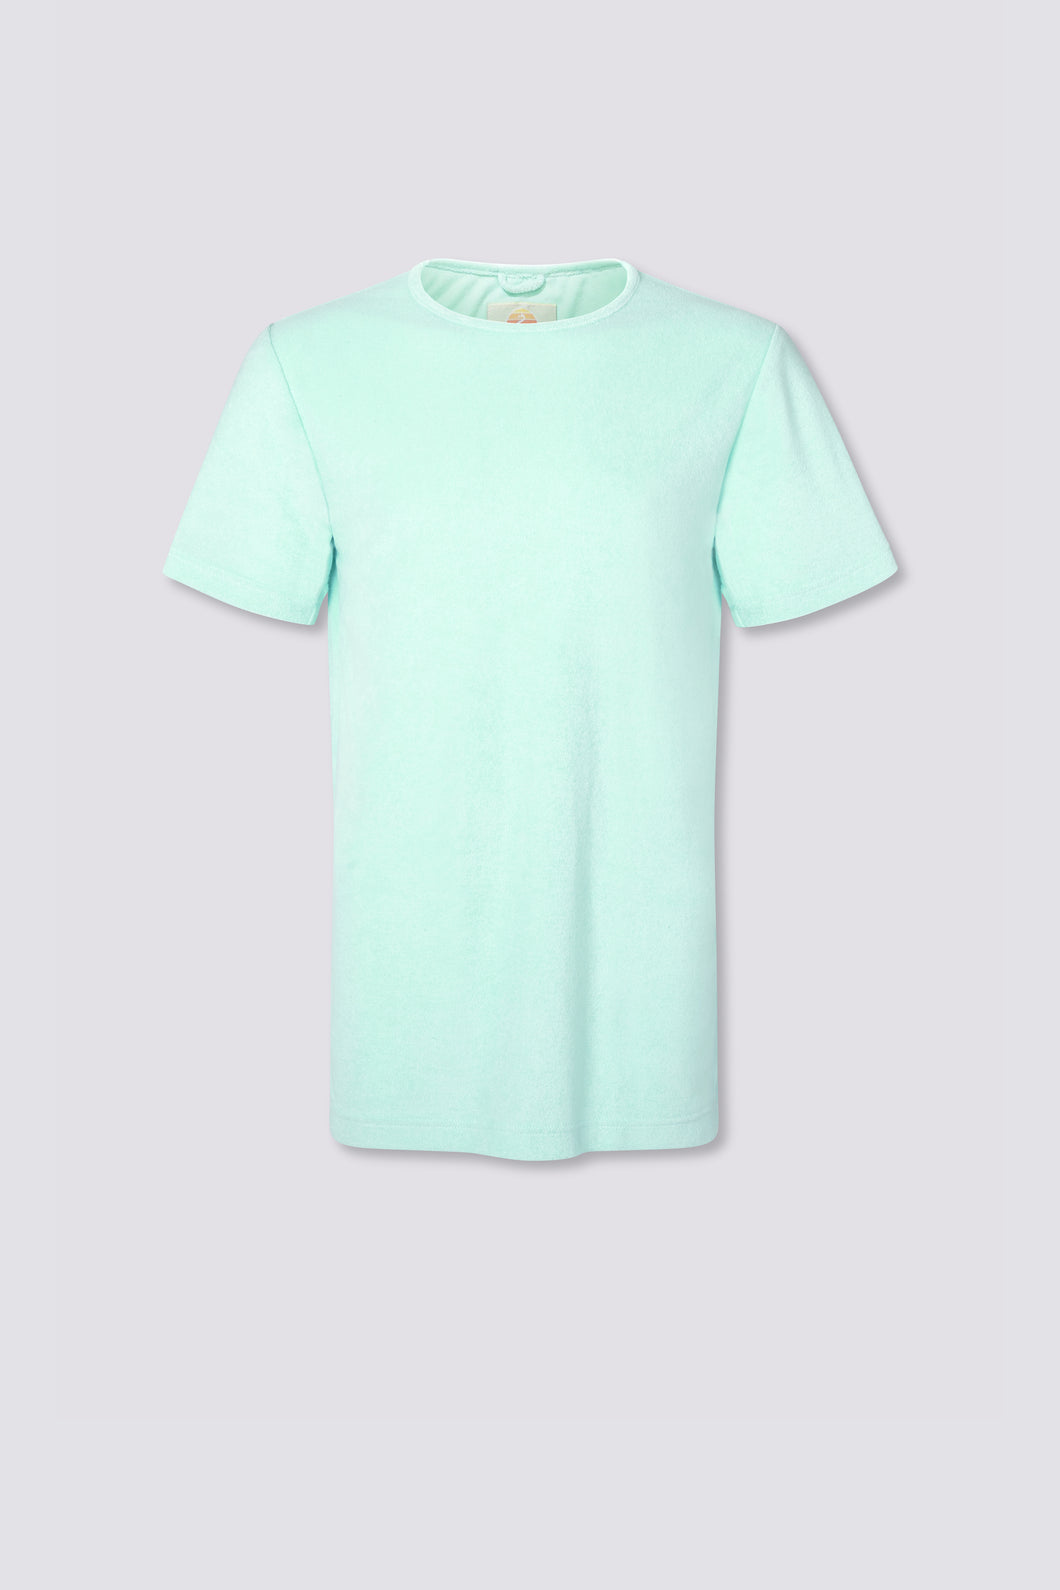 Terry Cloth Shirt - Tahitian Seafoam